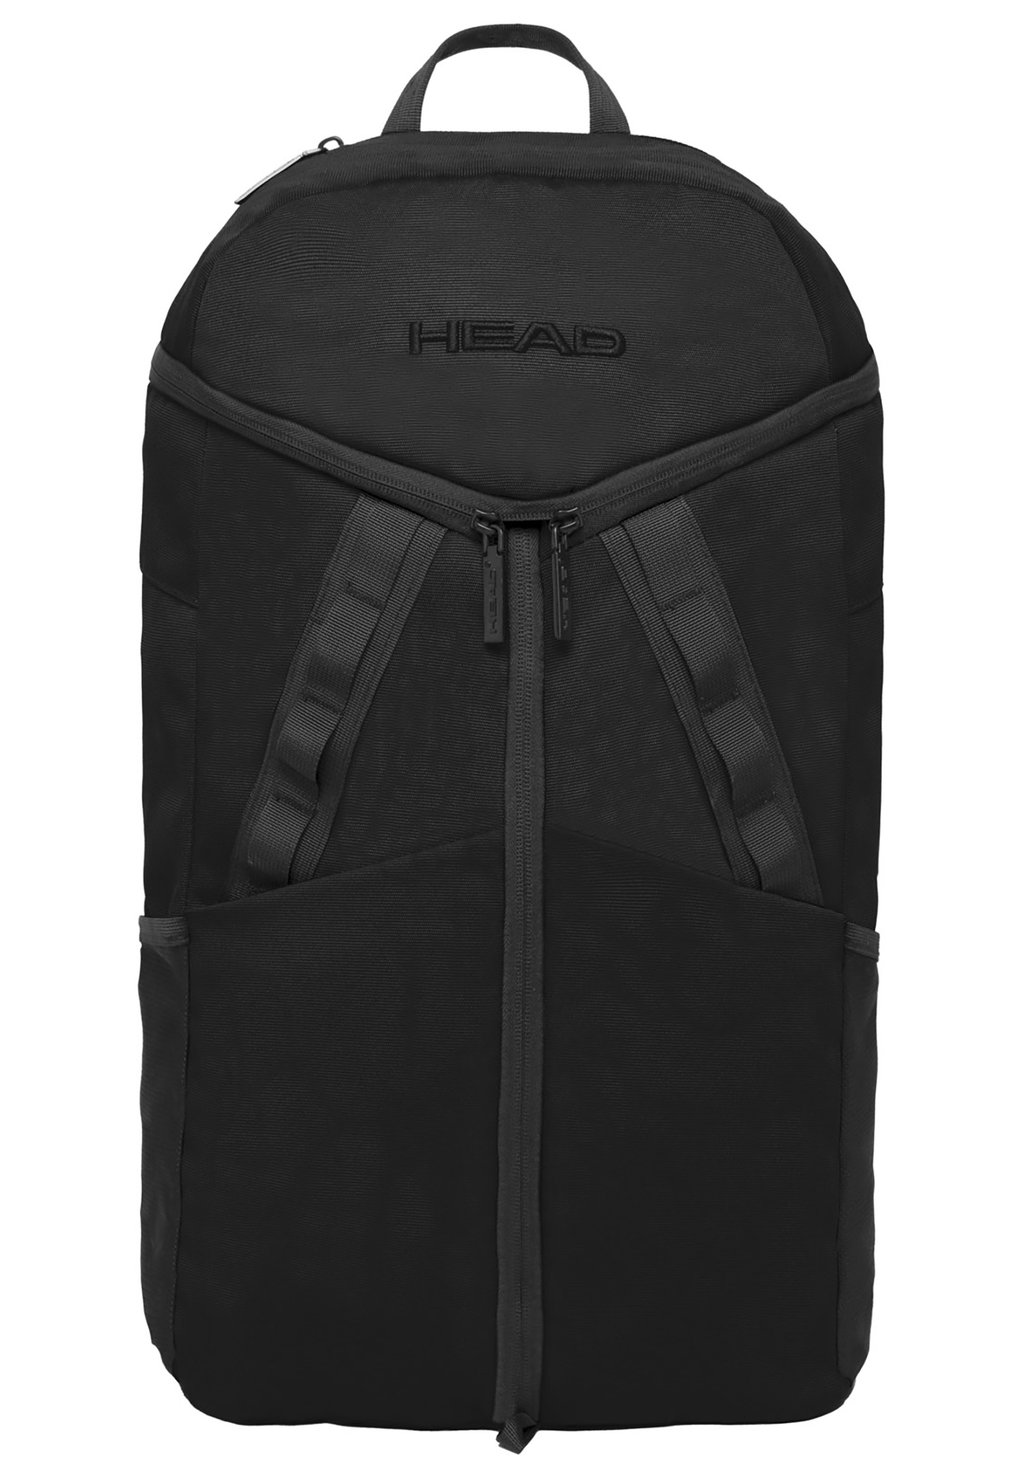 Рюкзак Head для путешествий, schwarz рюкзак для путешествий head net vertical темно синий